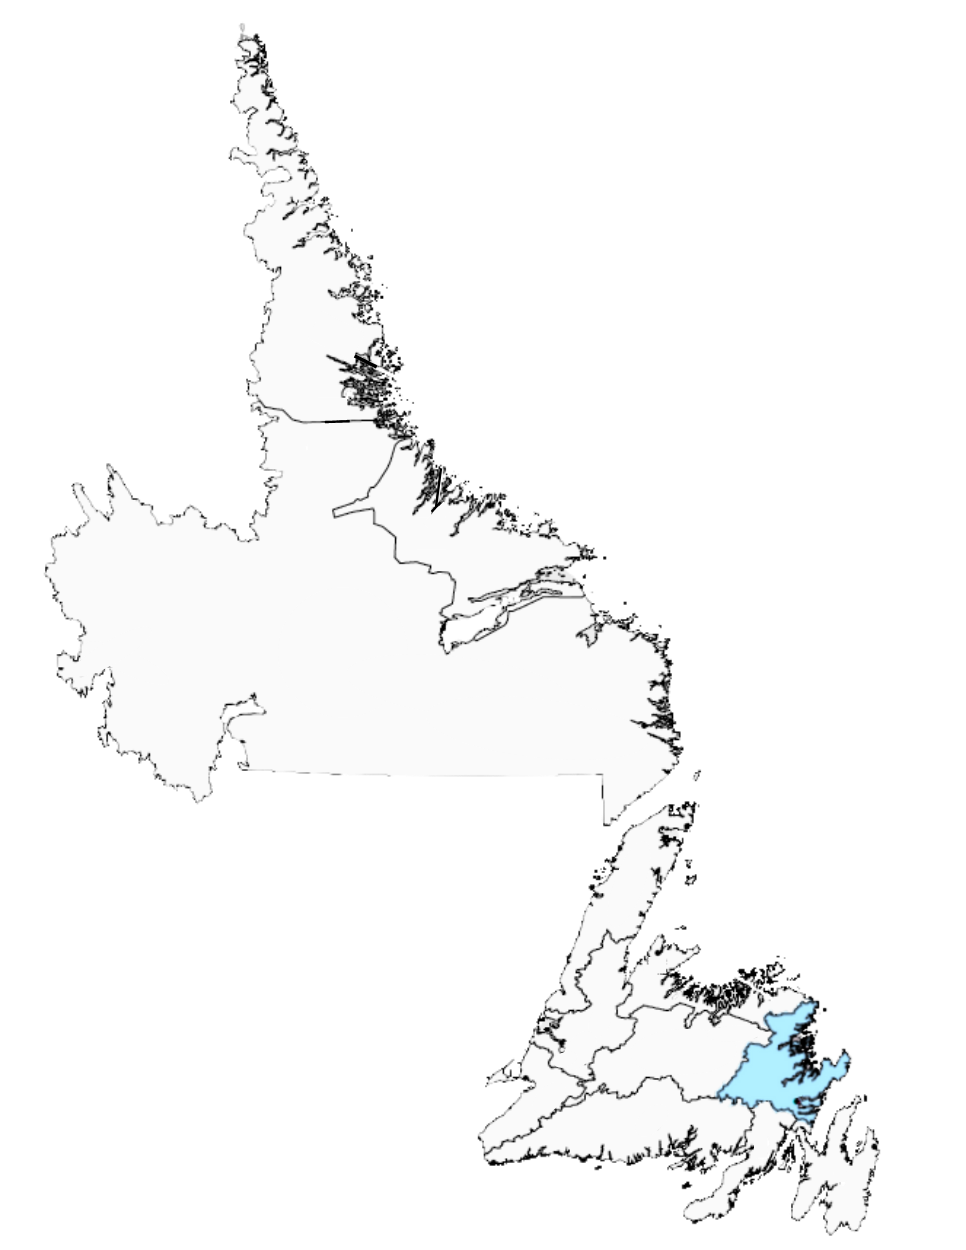 NL Map with bonavista and trinity region highlighted